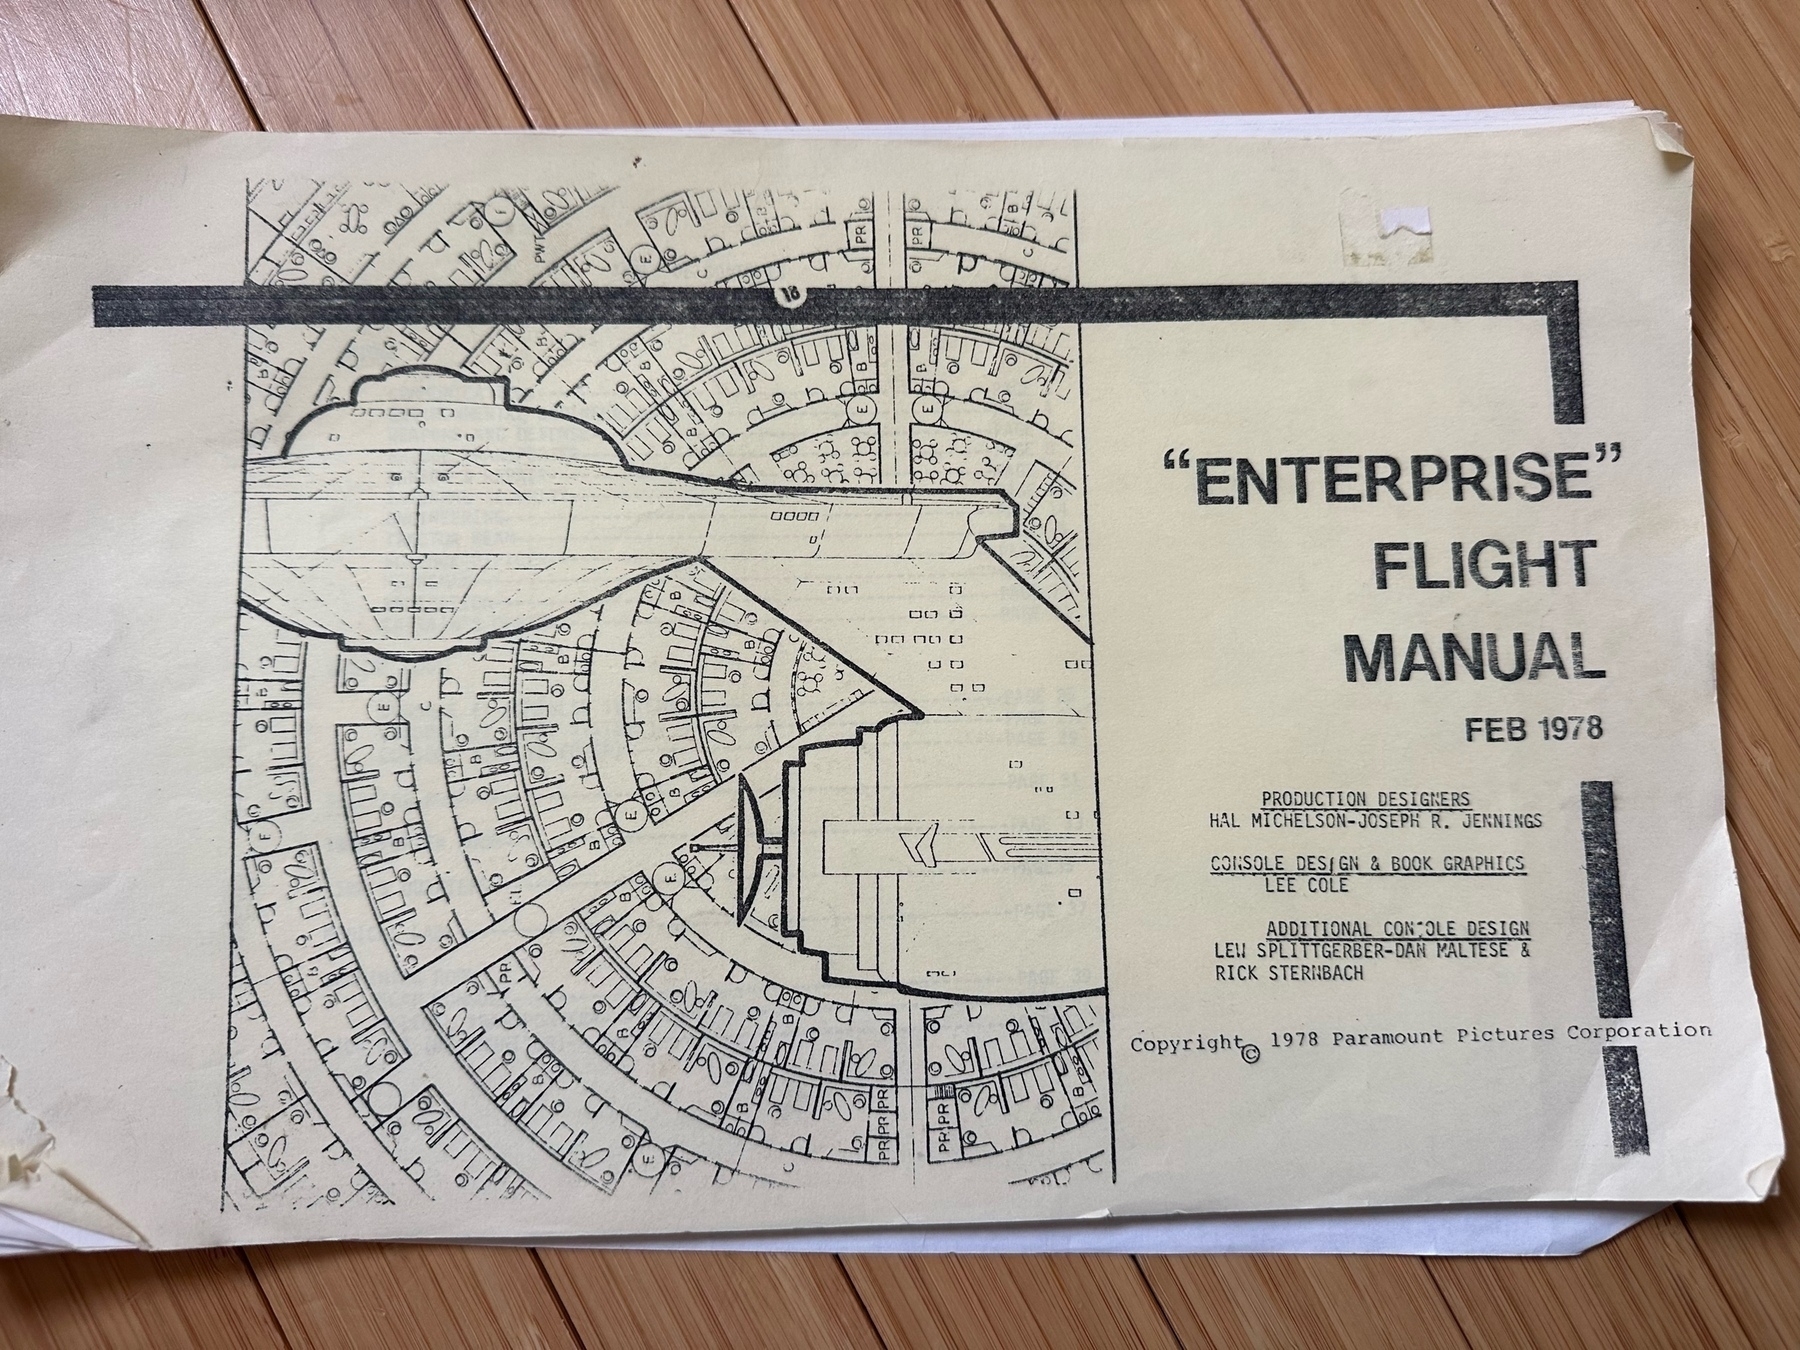 Enterprise Flufht Manual 1978